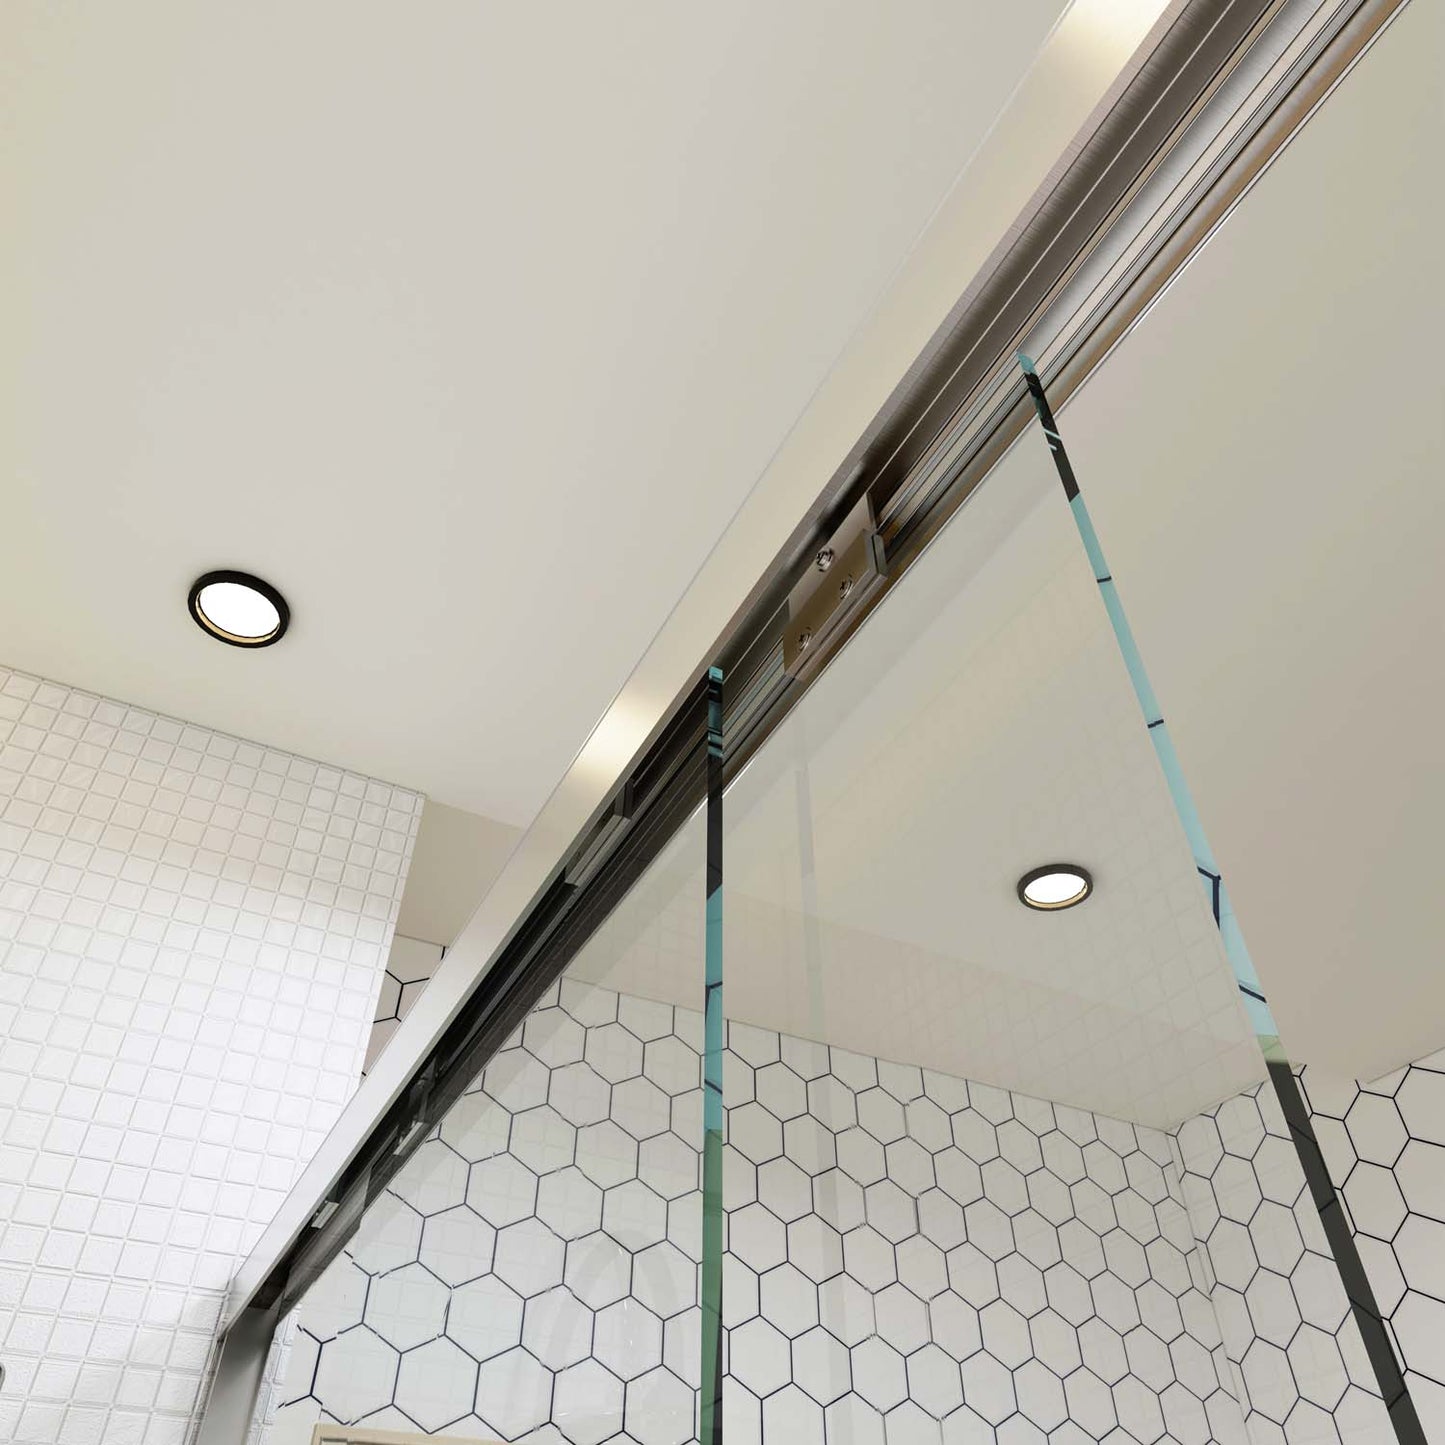 Toolkiss Semi Frameless Sliding Tub Shower Door 56’’ to 60’’ W x 58’’ H, Brush Nickel